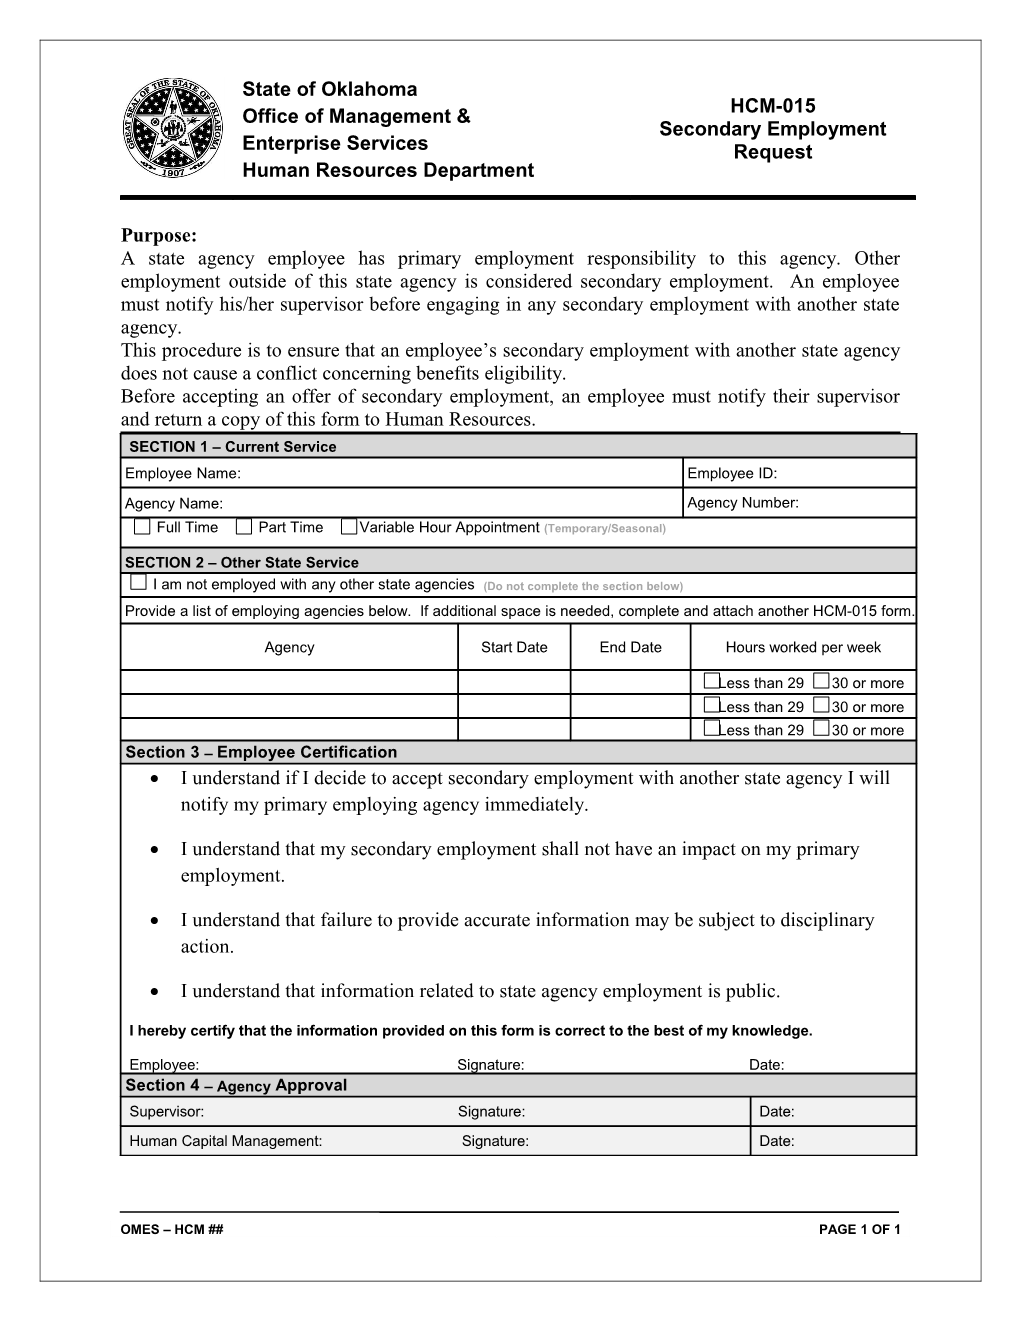 HCM-015 Secondary Employment Request